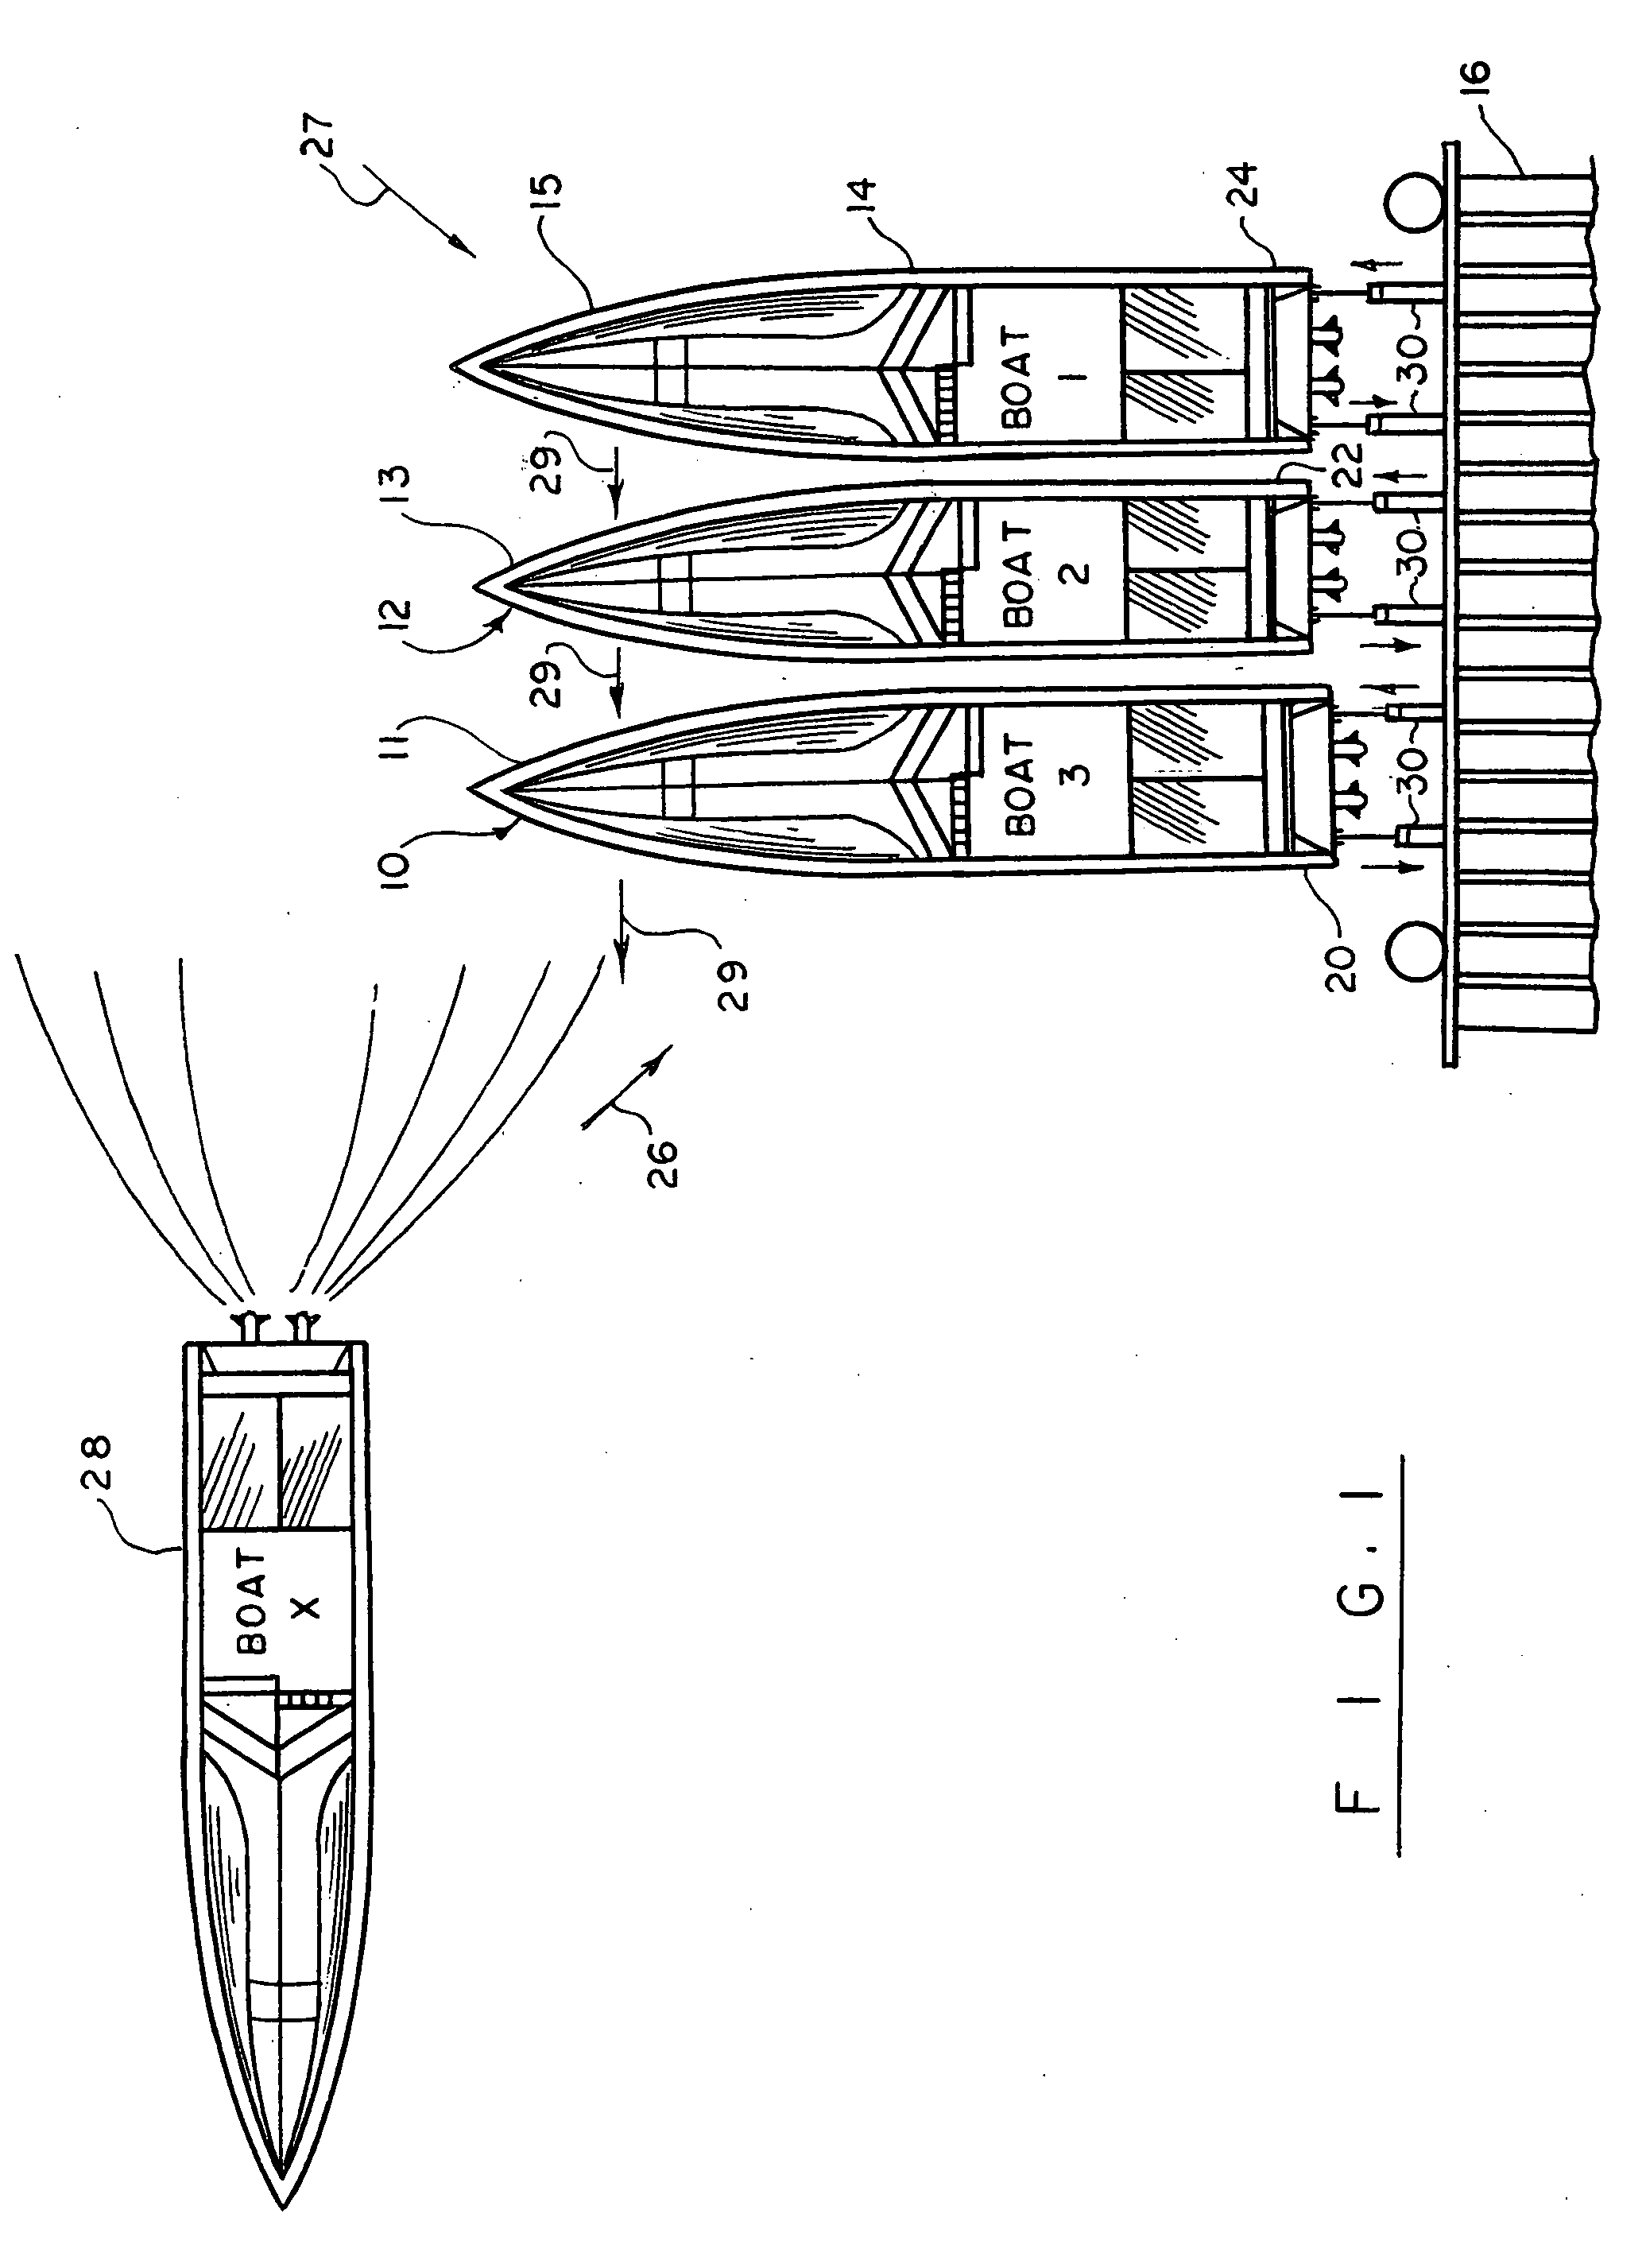 Boat docking apparatus